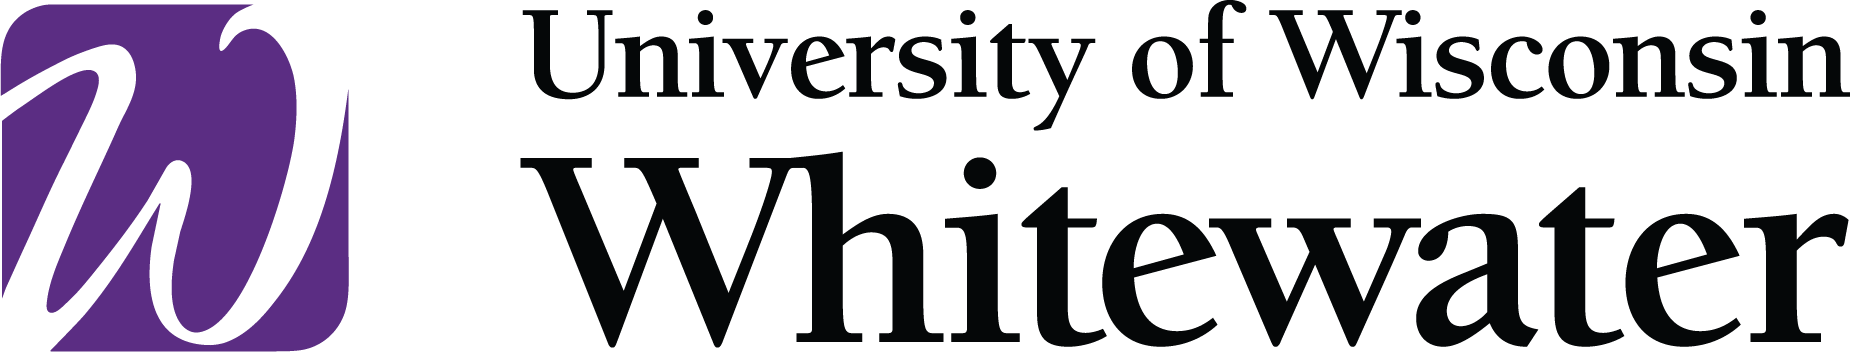 UW-Whitewater_logo_2c_lead_hortizontal